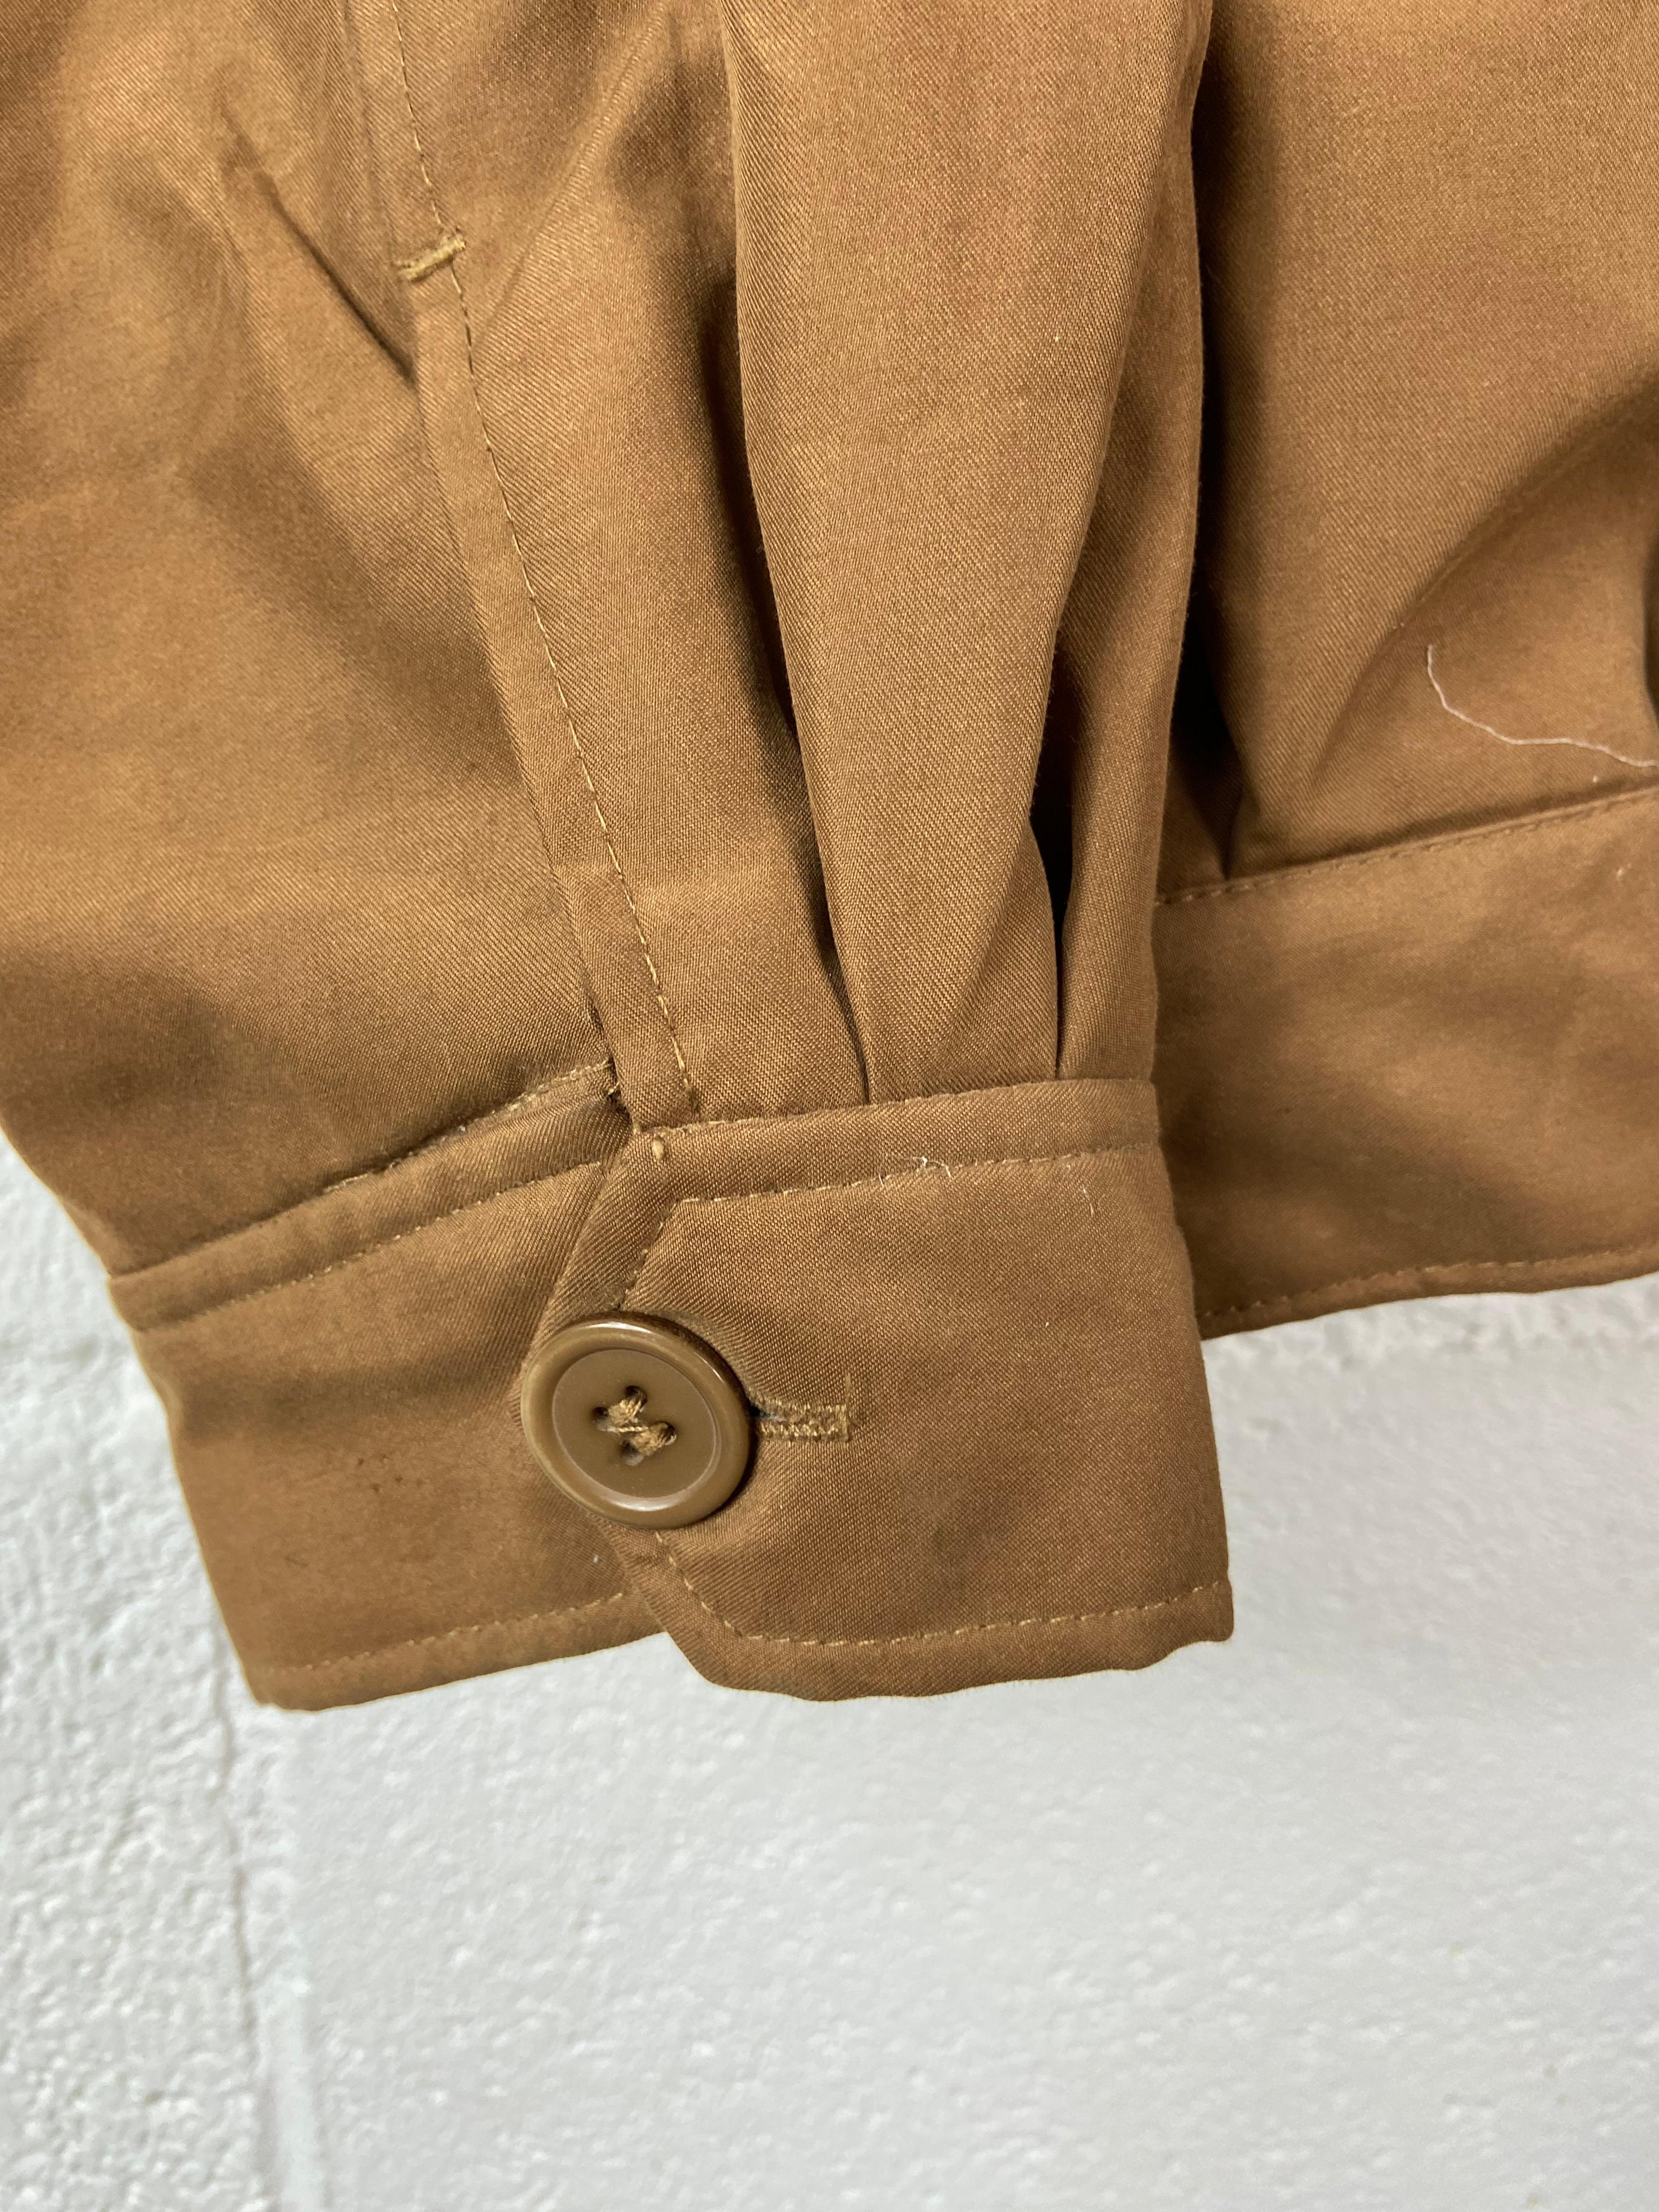 Alternate View 2 of VTG Polo Ralph Lauren Brown Zip Up Jacket Sz XL